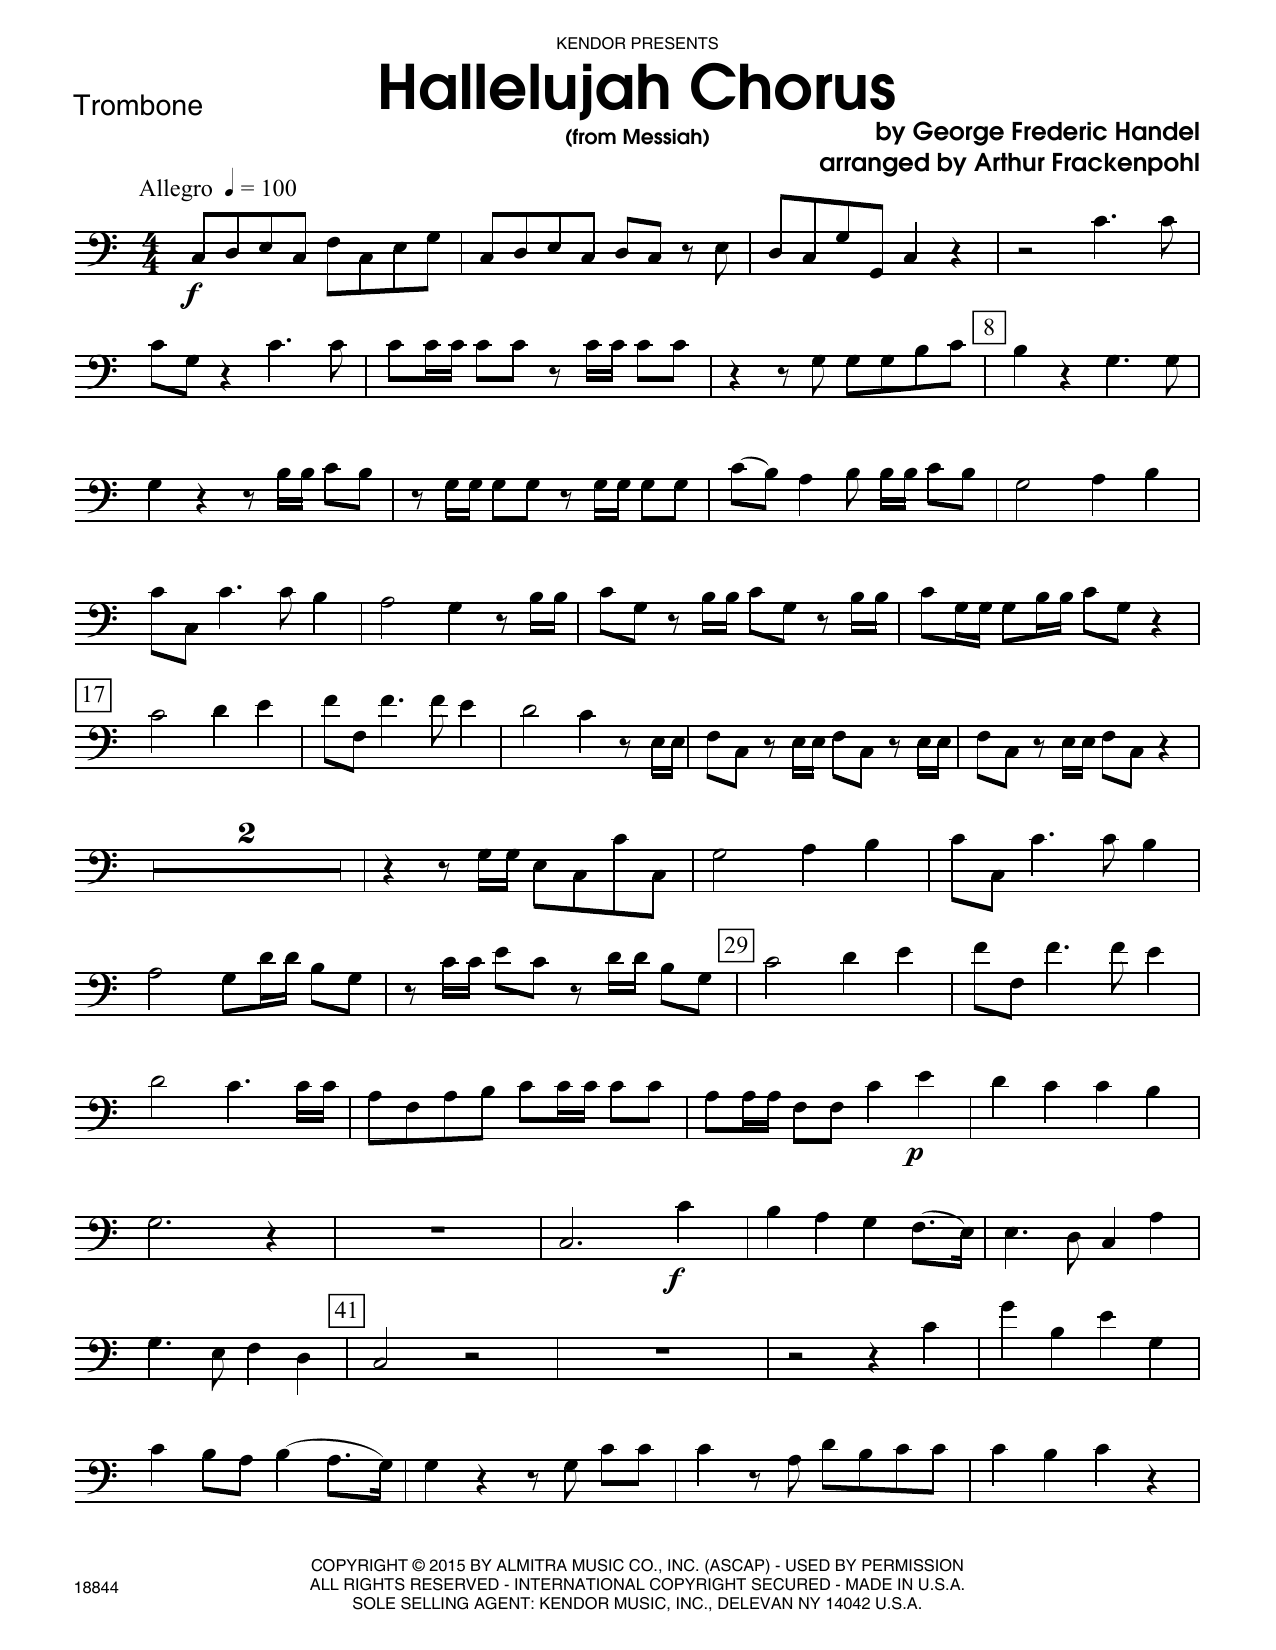 Download Arthur Frackenpohl Hallelujah Chorus (from Messiah) - Trom Sheet Music